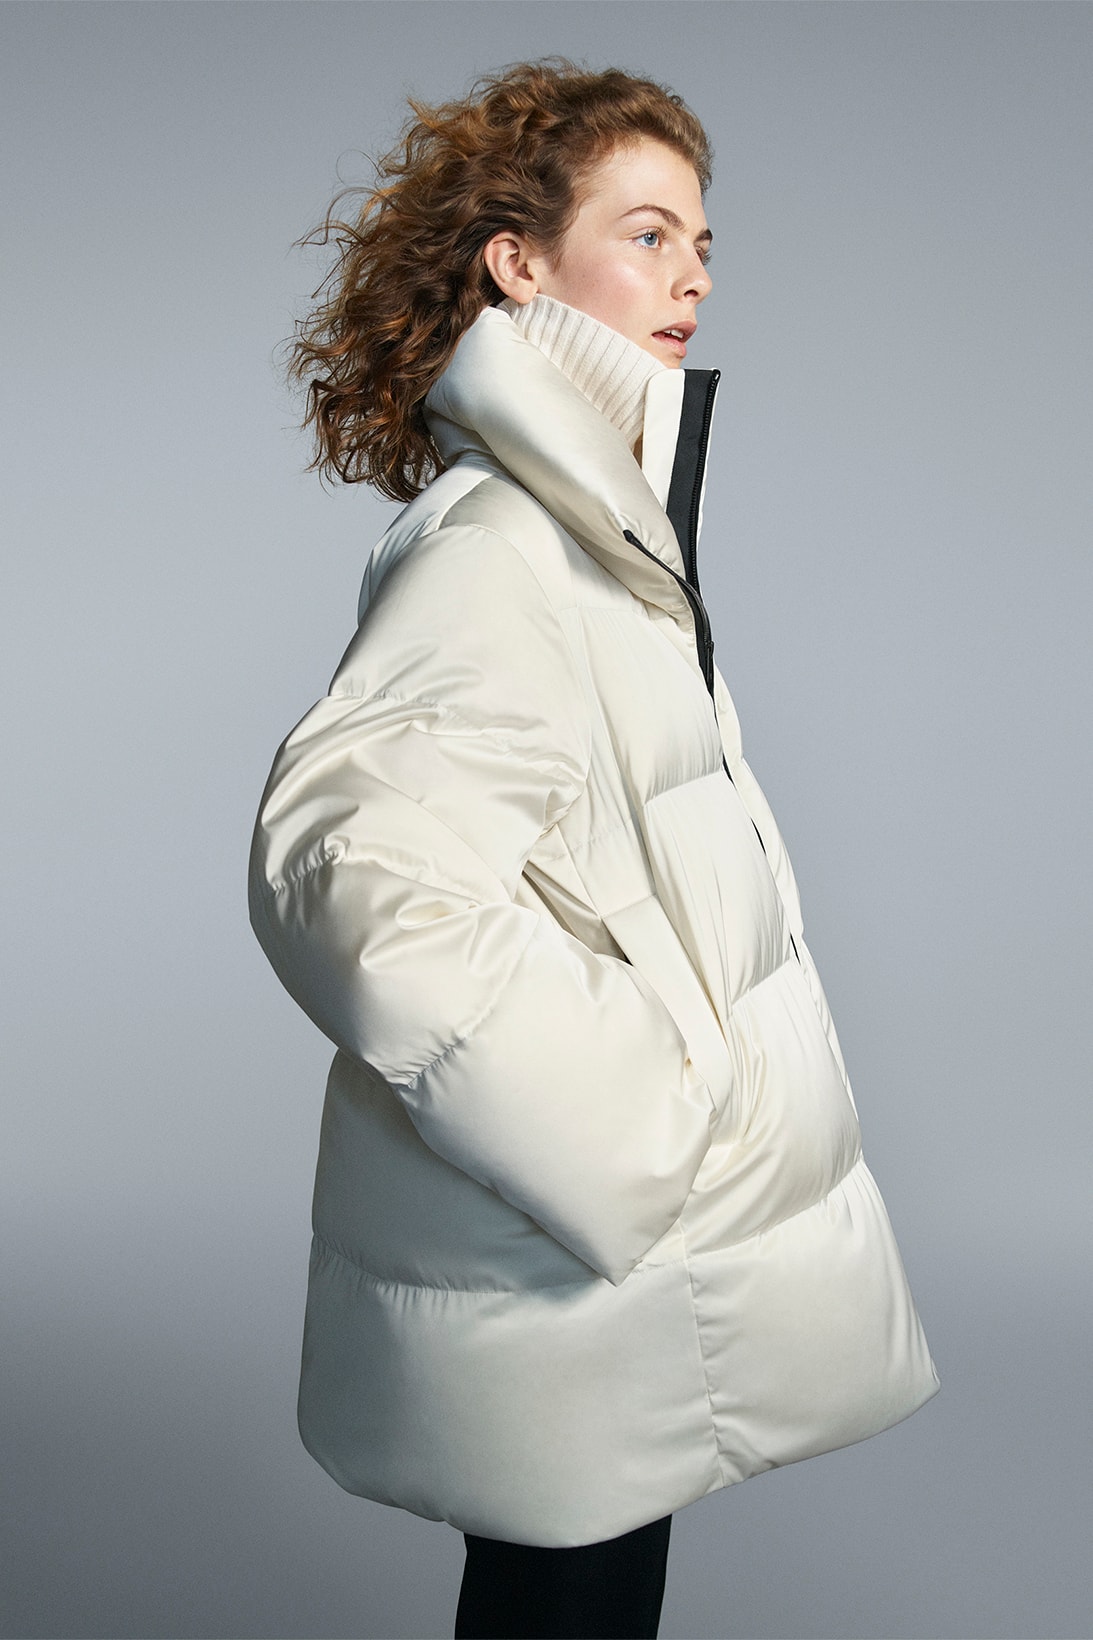 Zara jackets 20-2021 fall winter men's collection